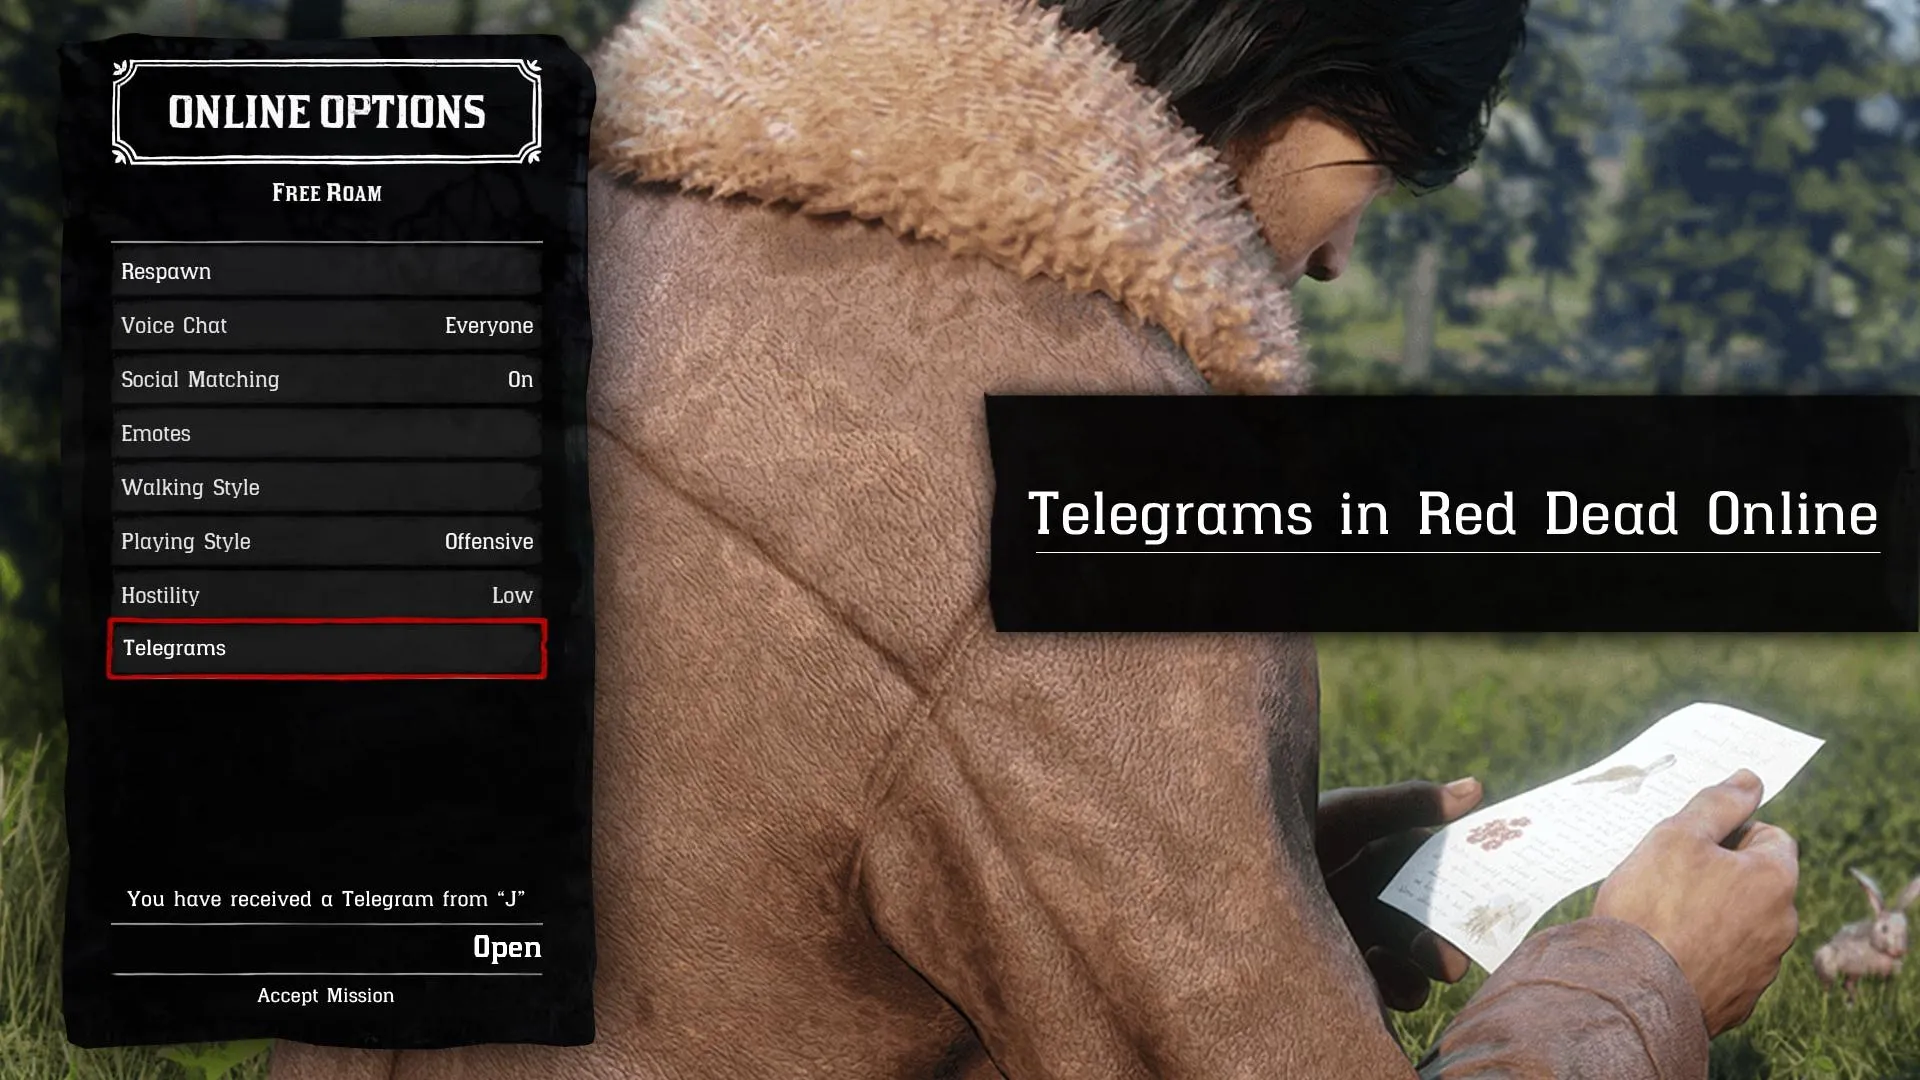 red dead online telegrams concept article